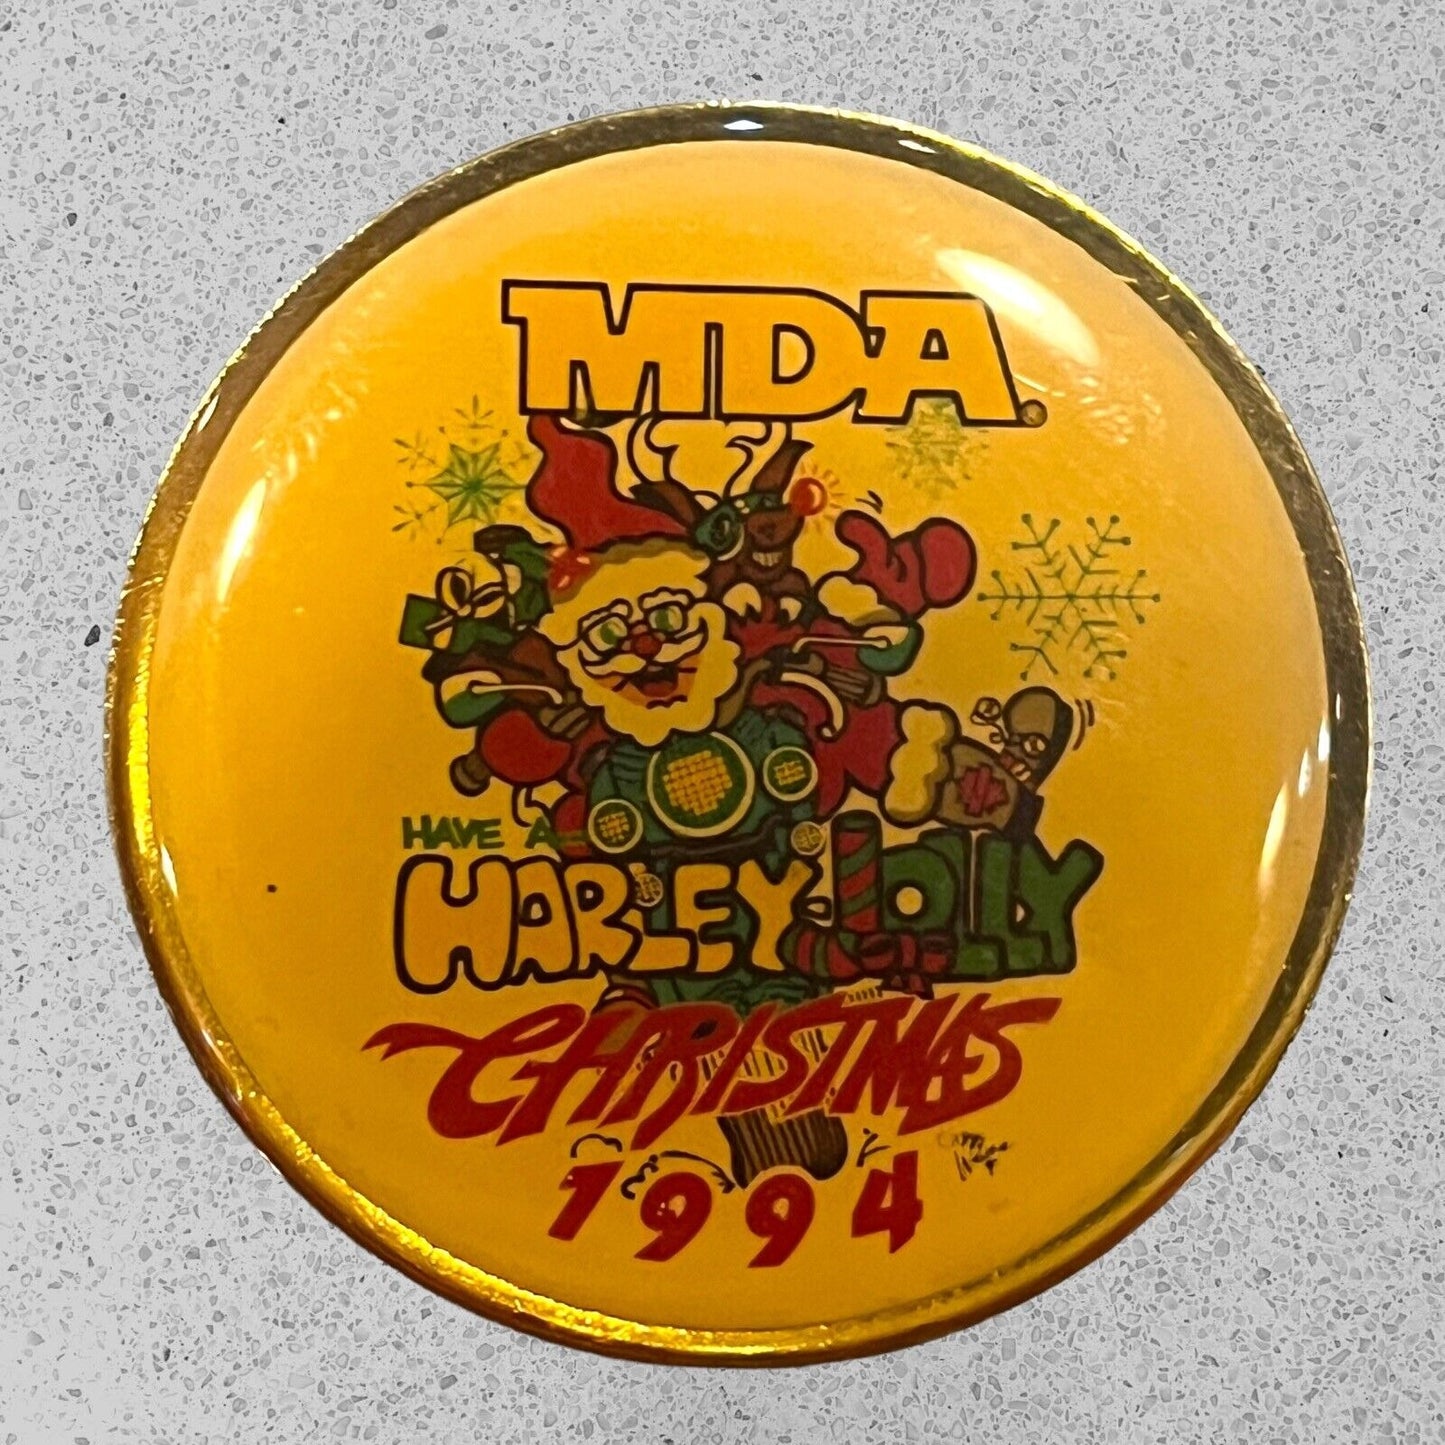 1994 HARLEY DAVIDSON MOTORCYCLES MDA HAVE A HARLEY JOLLY CHRISTMAS PIN BUTTON